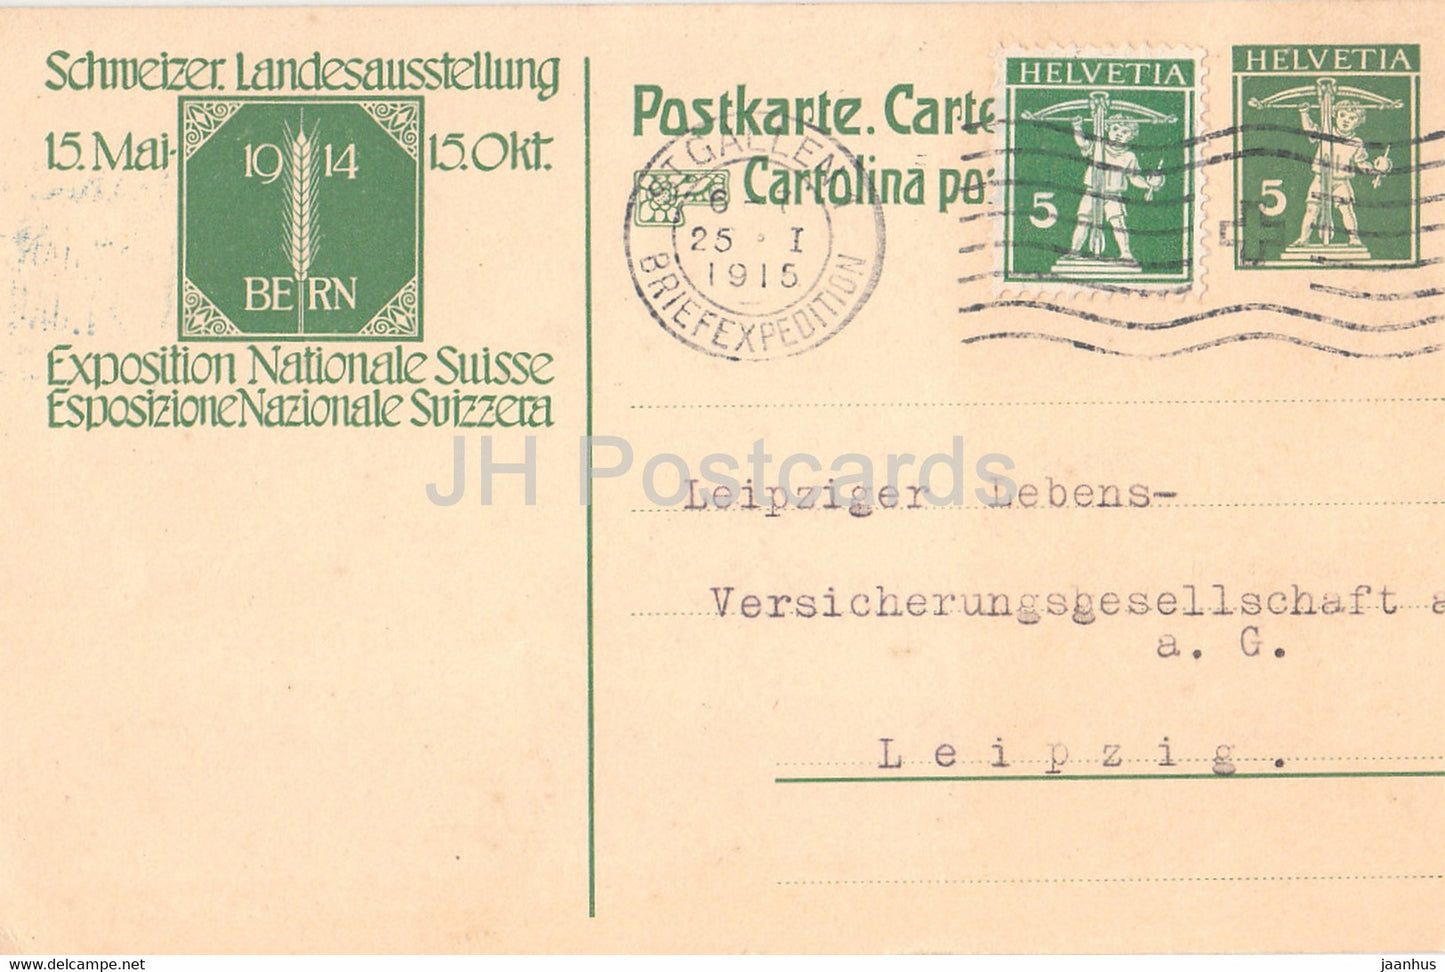 Schweizer Landesausstellung 15 Mai 1914 - Exposition Nationale Suisse - old postcard - Switzerland - used - JH Postcards